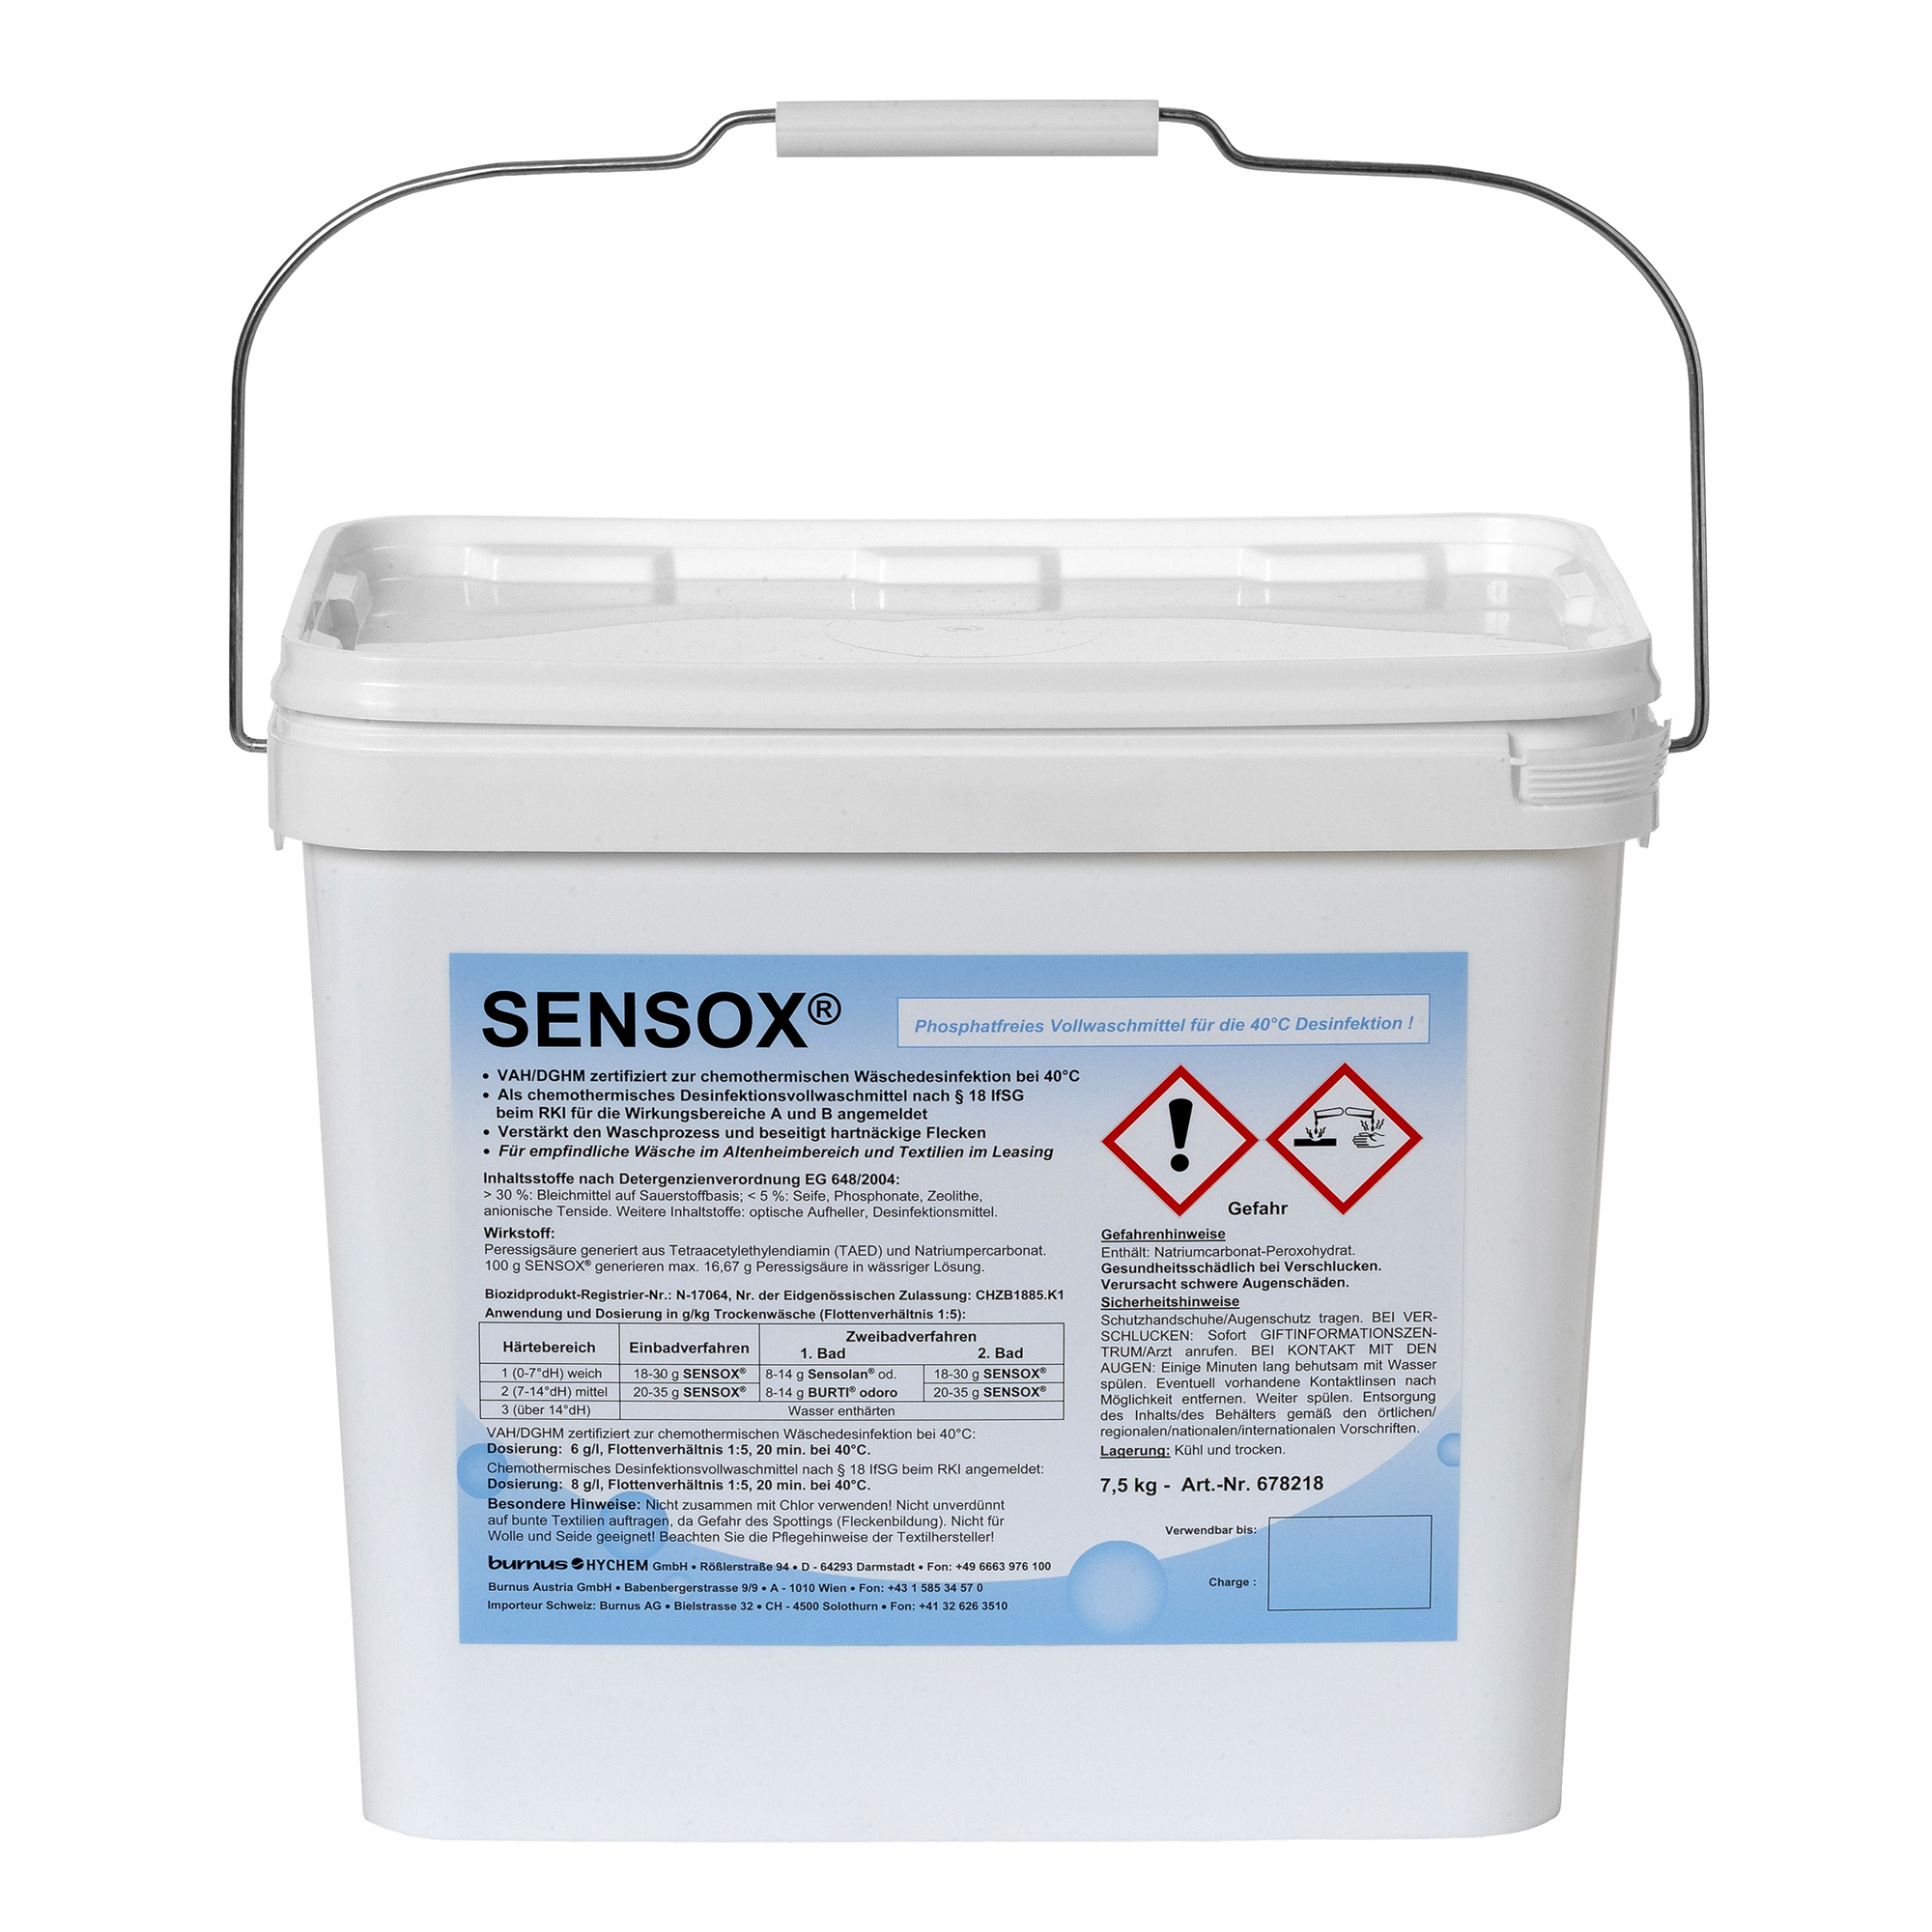 Burnus SENSOX Desinfektionswaschmittel 7,5 kg Eimer 678218_1